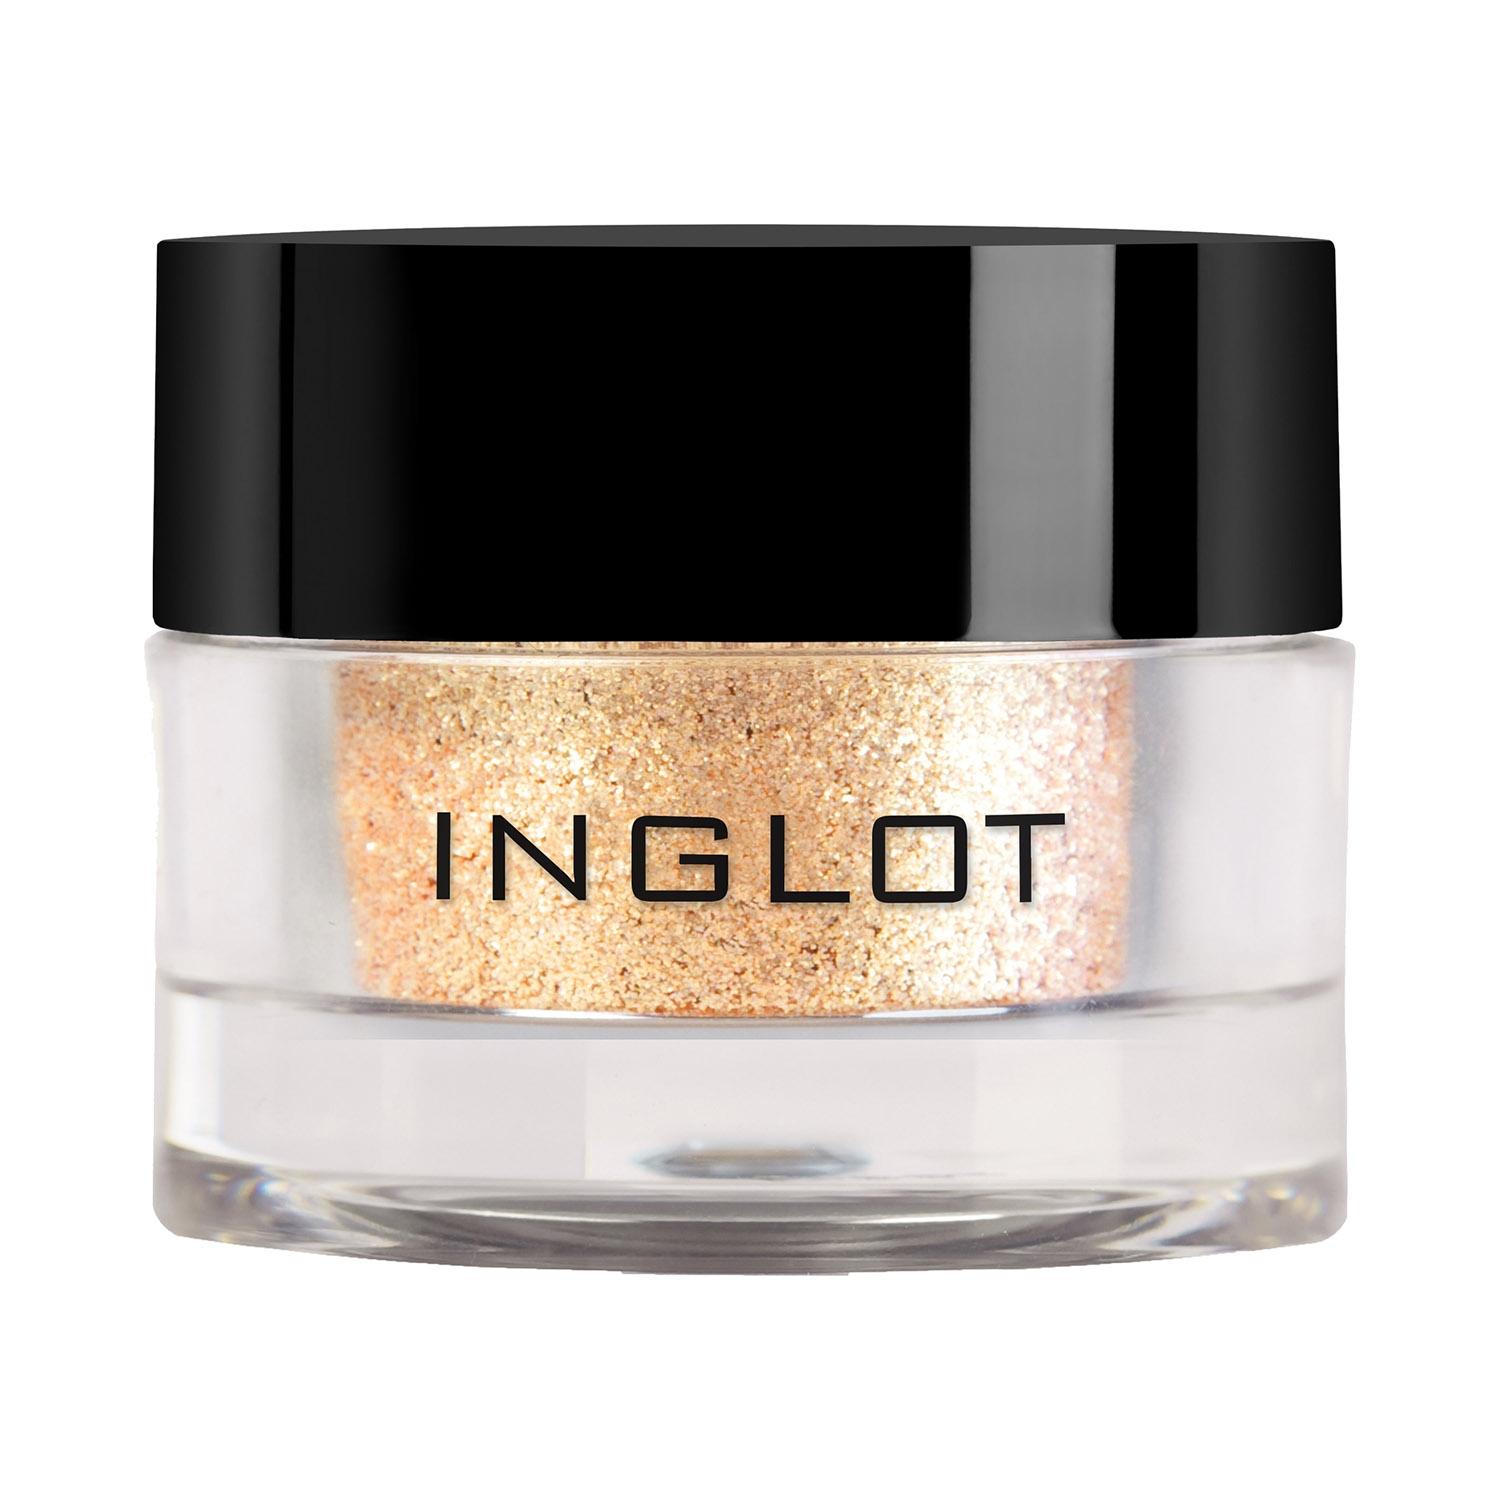 inglot amc pure pigment eye shadow - 121 shade (2g)